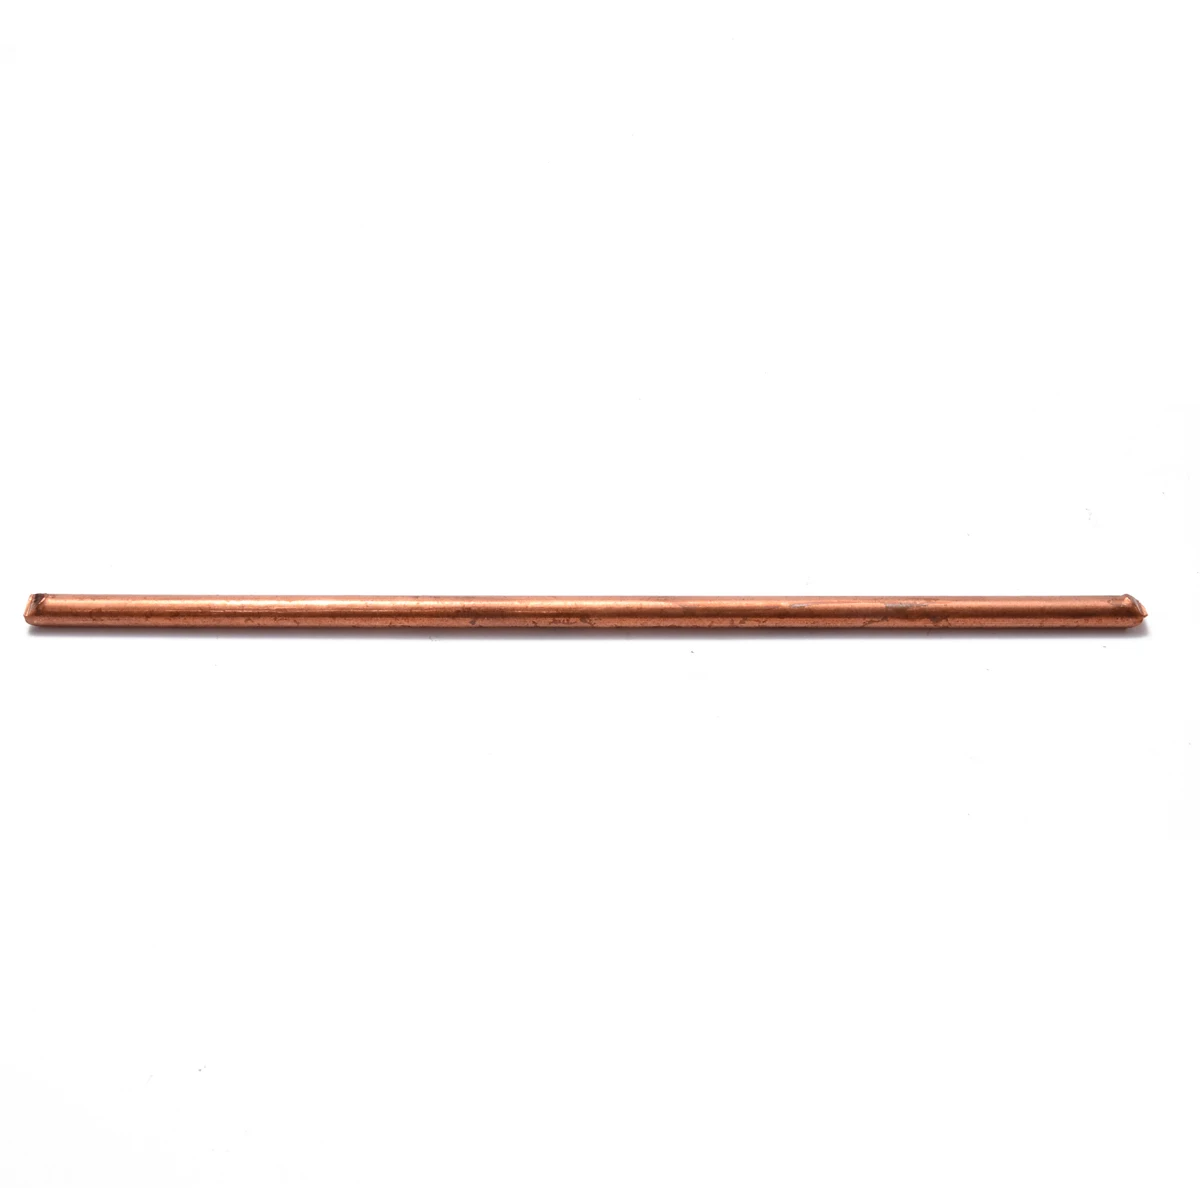 LOKIH Copper Round Bar Metal Crafts Diameter 38Mm Length 200Mm